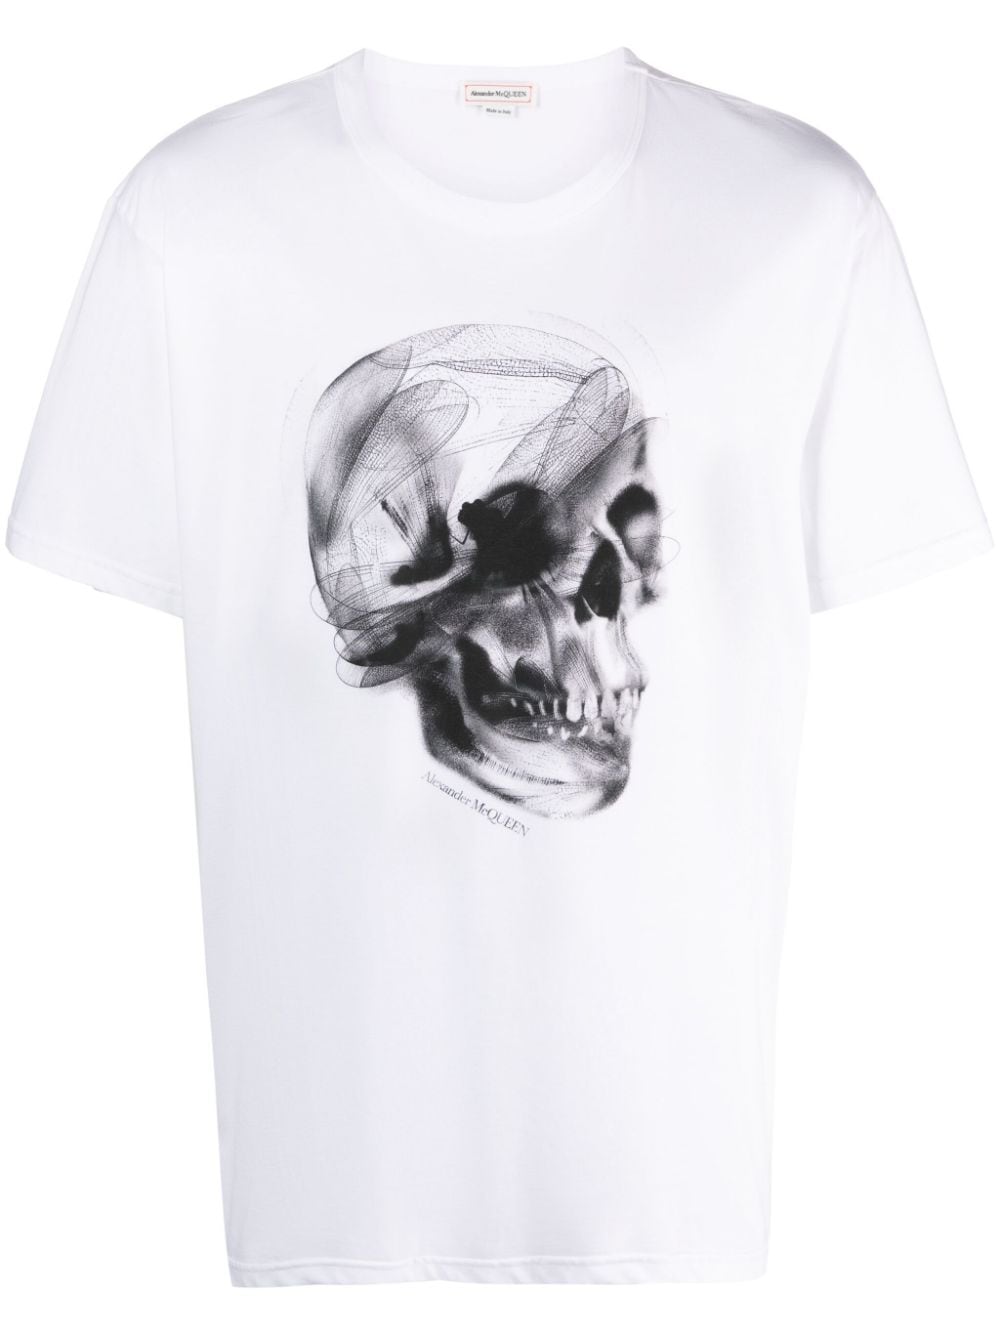 Skull-print cotton T-shirt<BR/><BR/><BR/>